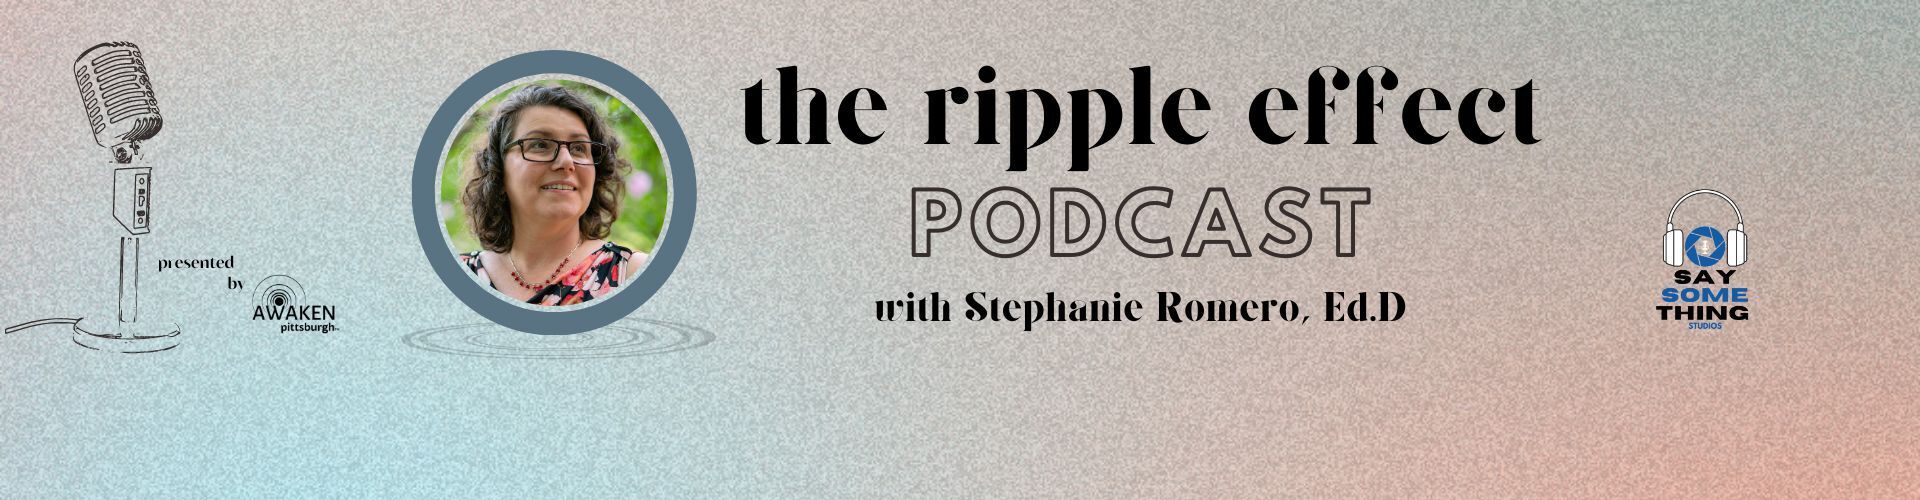 The Ripple Effect with Stephanie Romero Ed.D